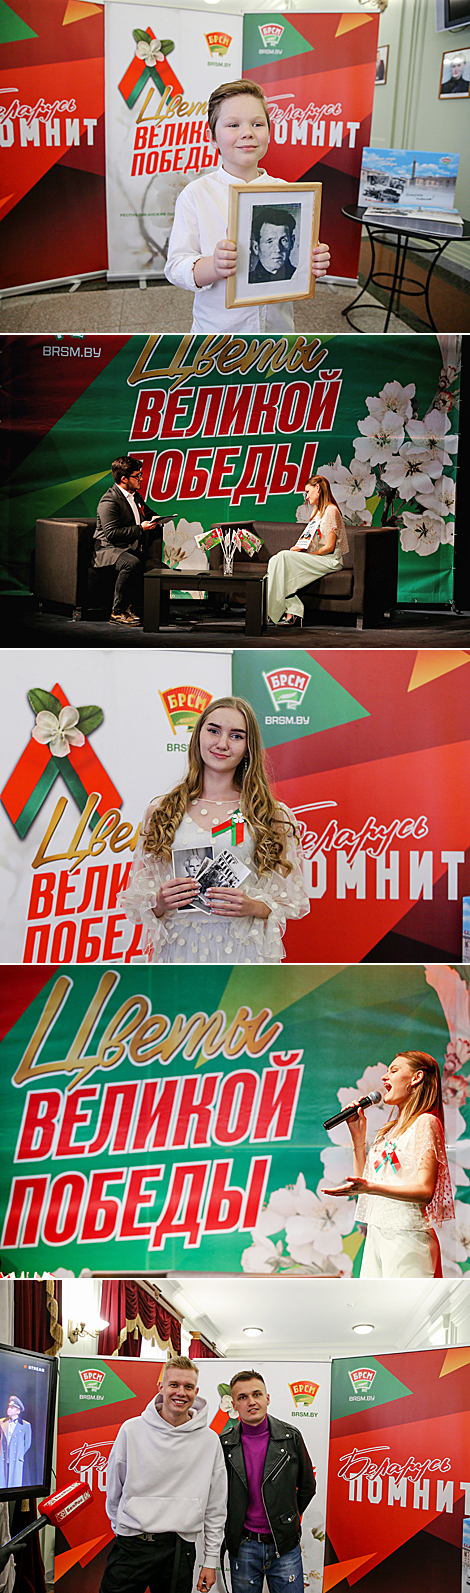 On Air marathon Belarus Remembers kicks off in Minsk